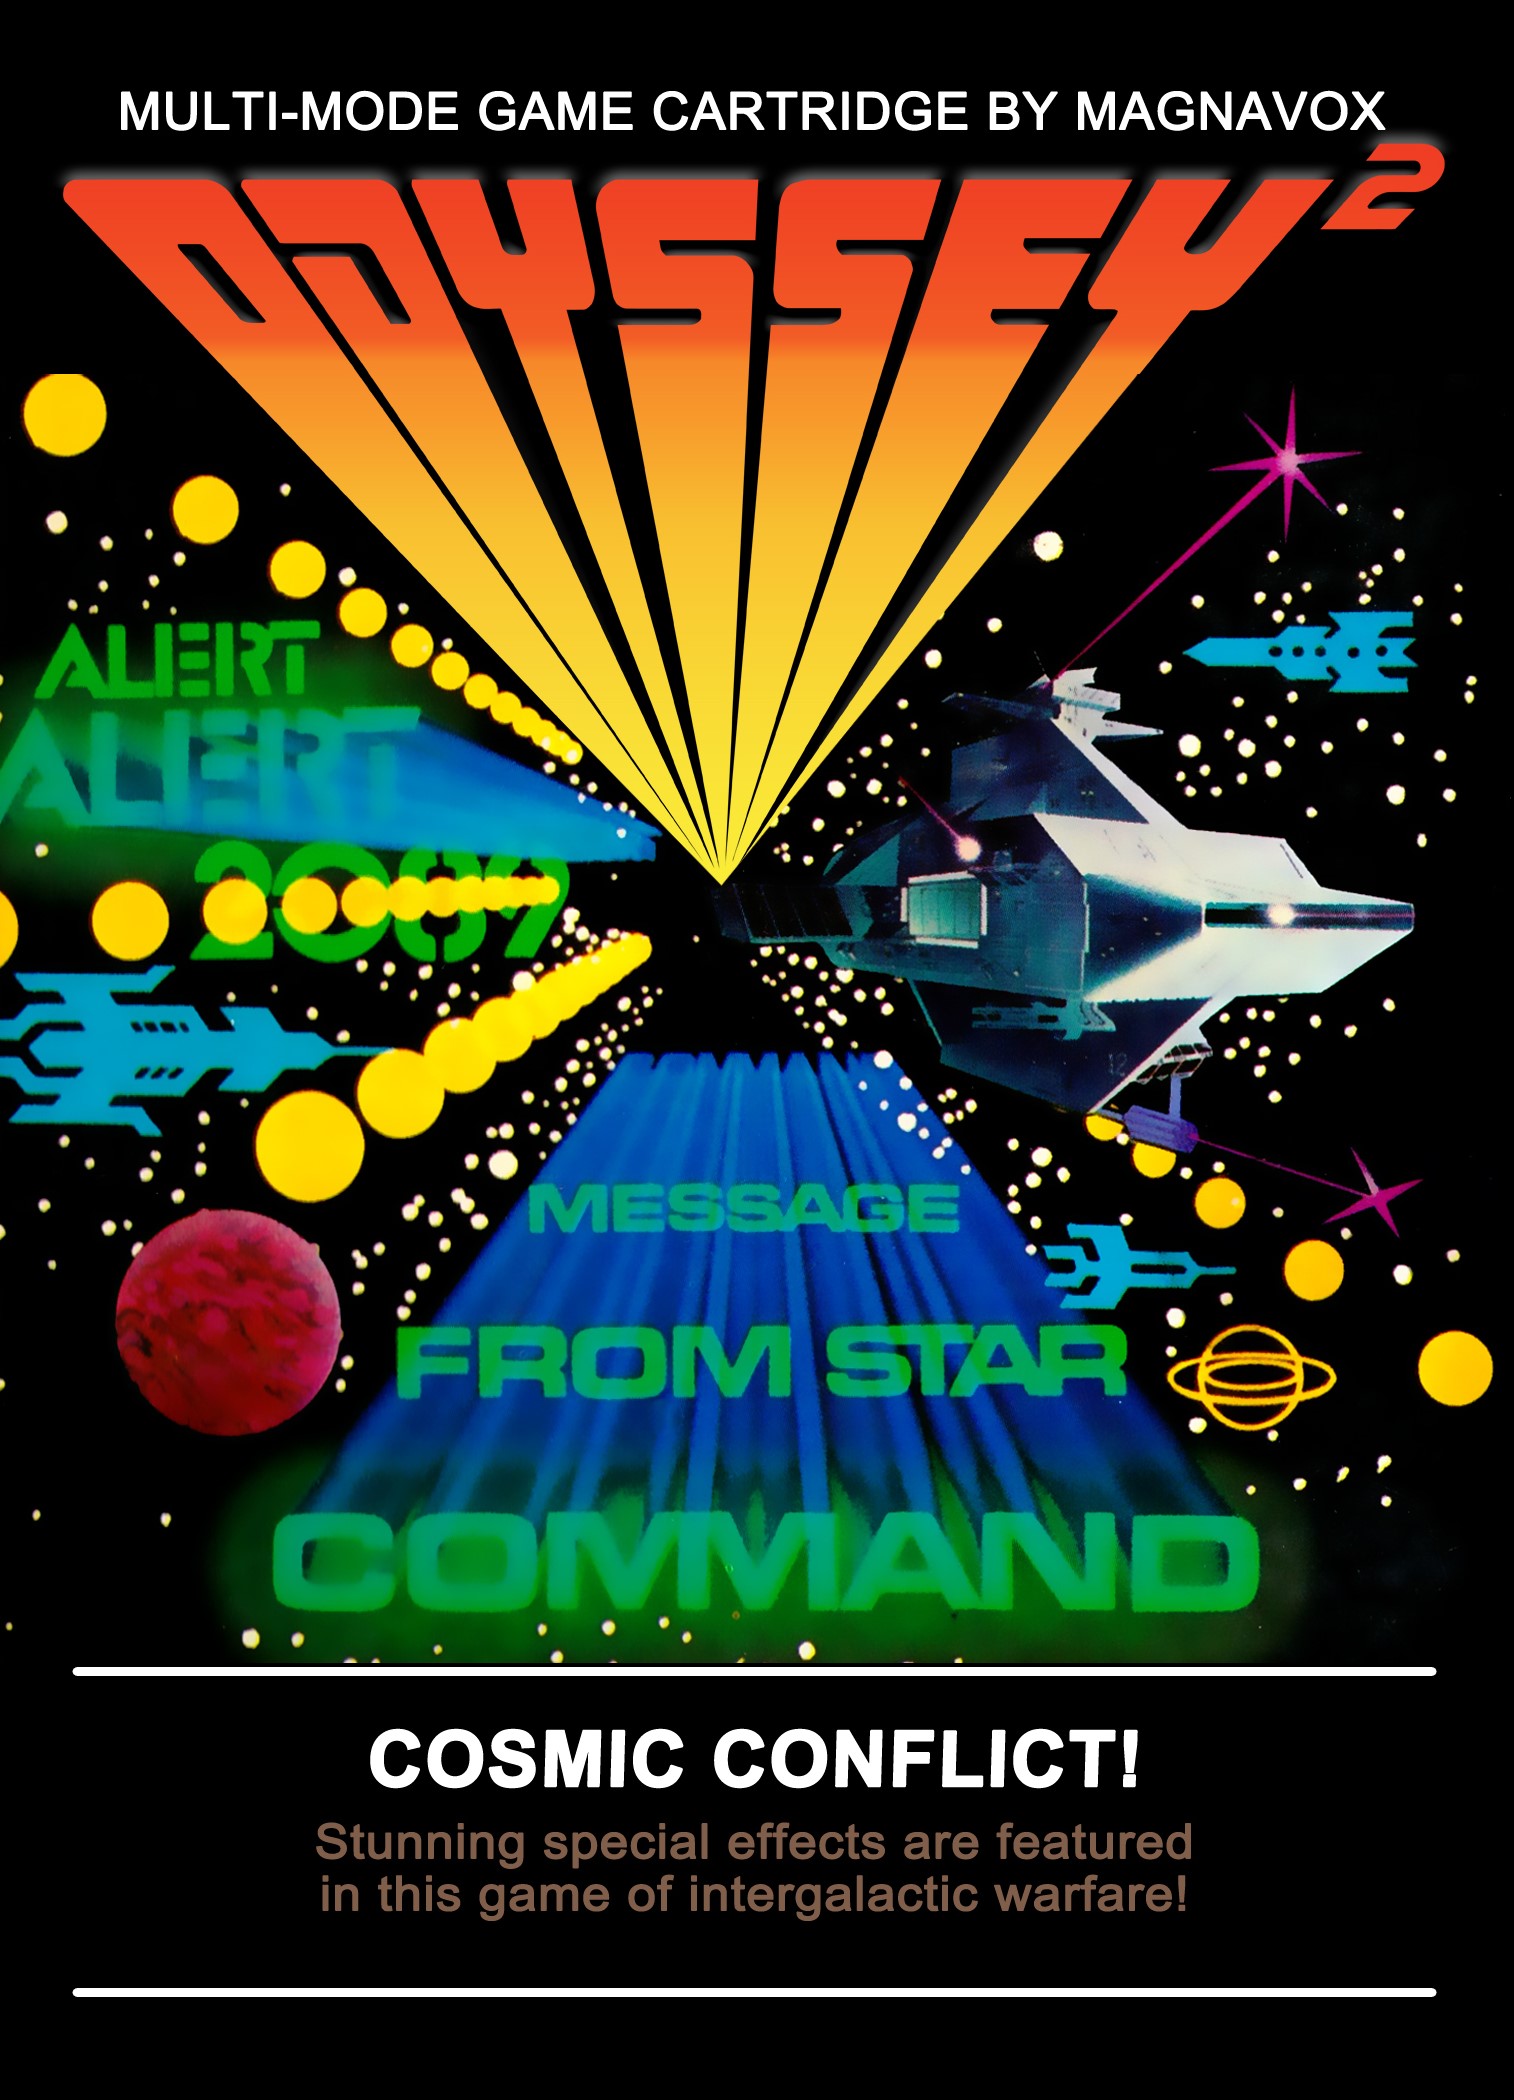 'Cosmic Conflict'